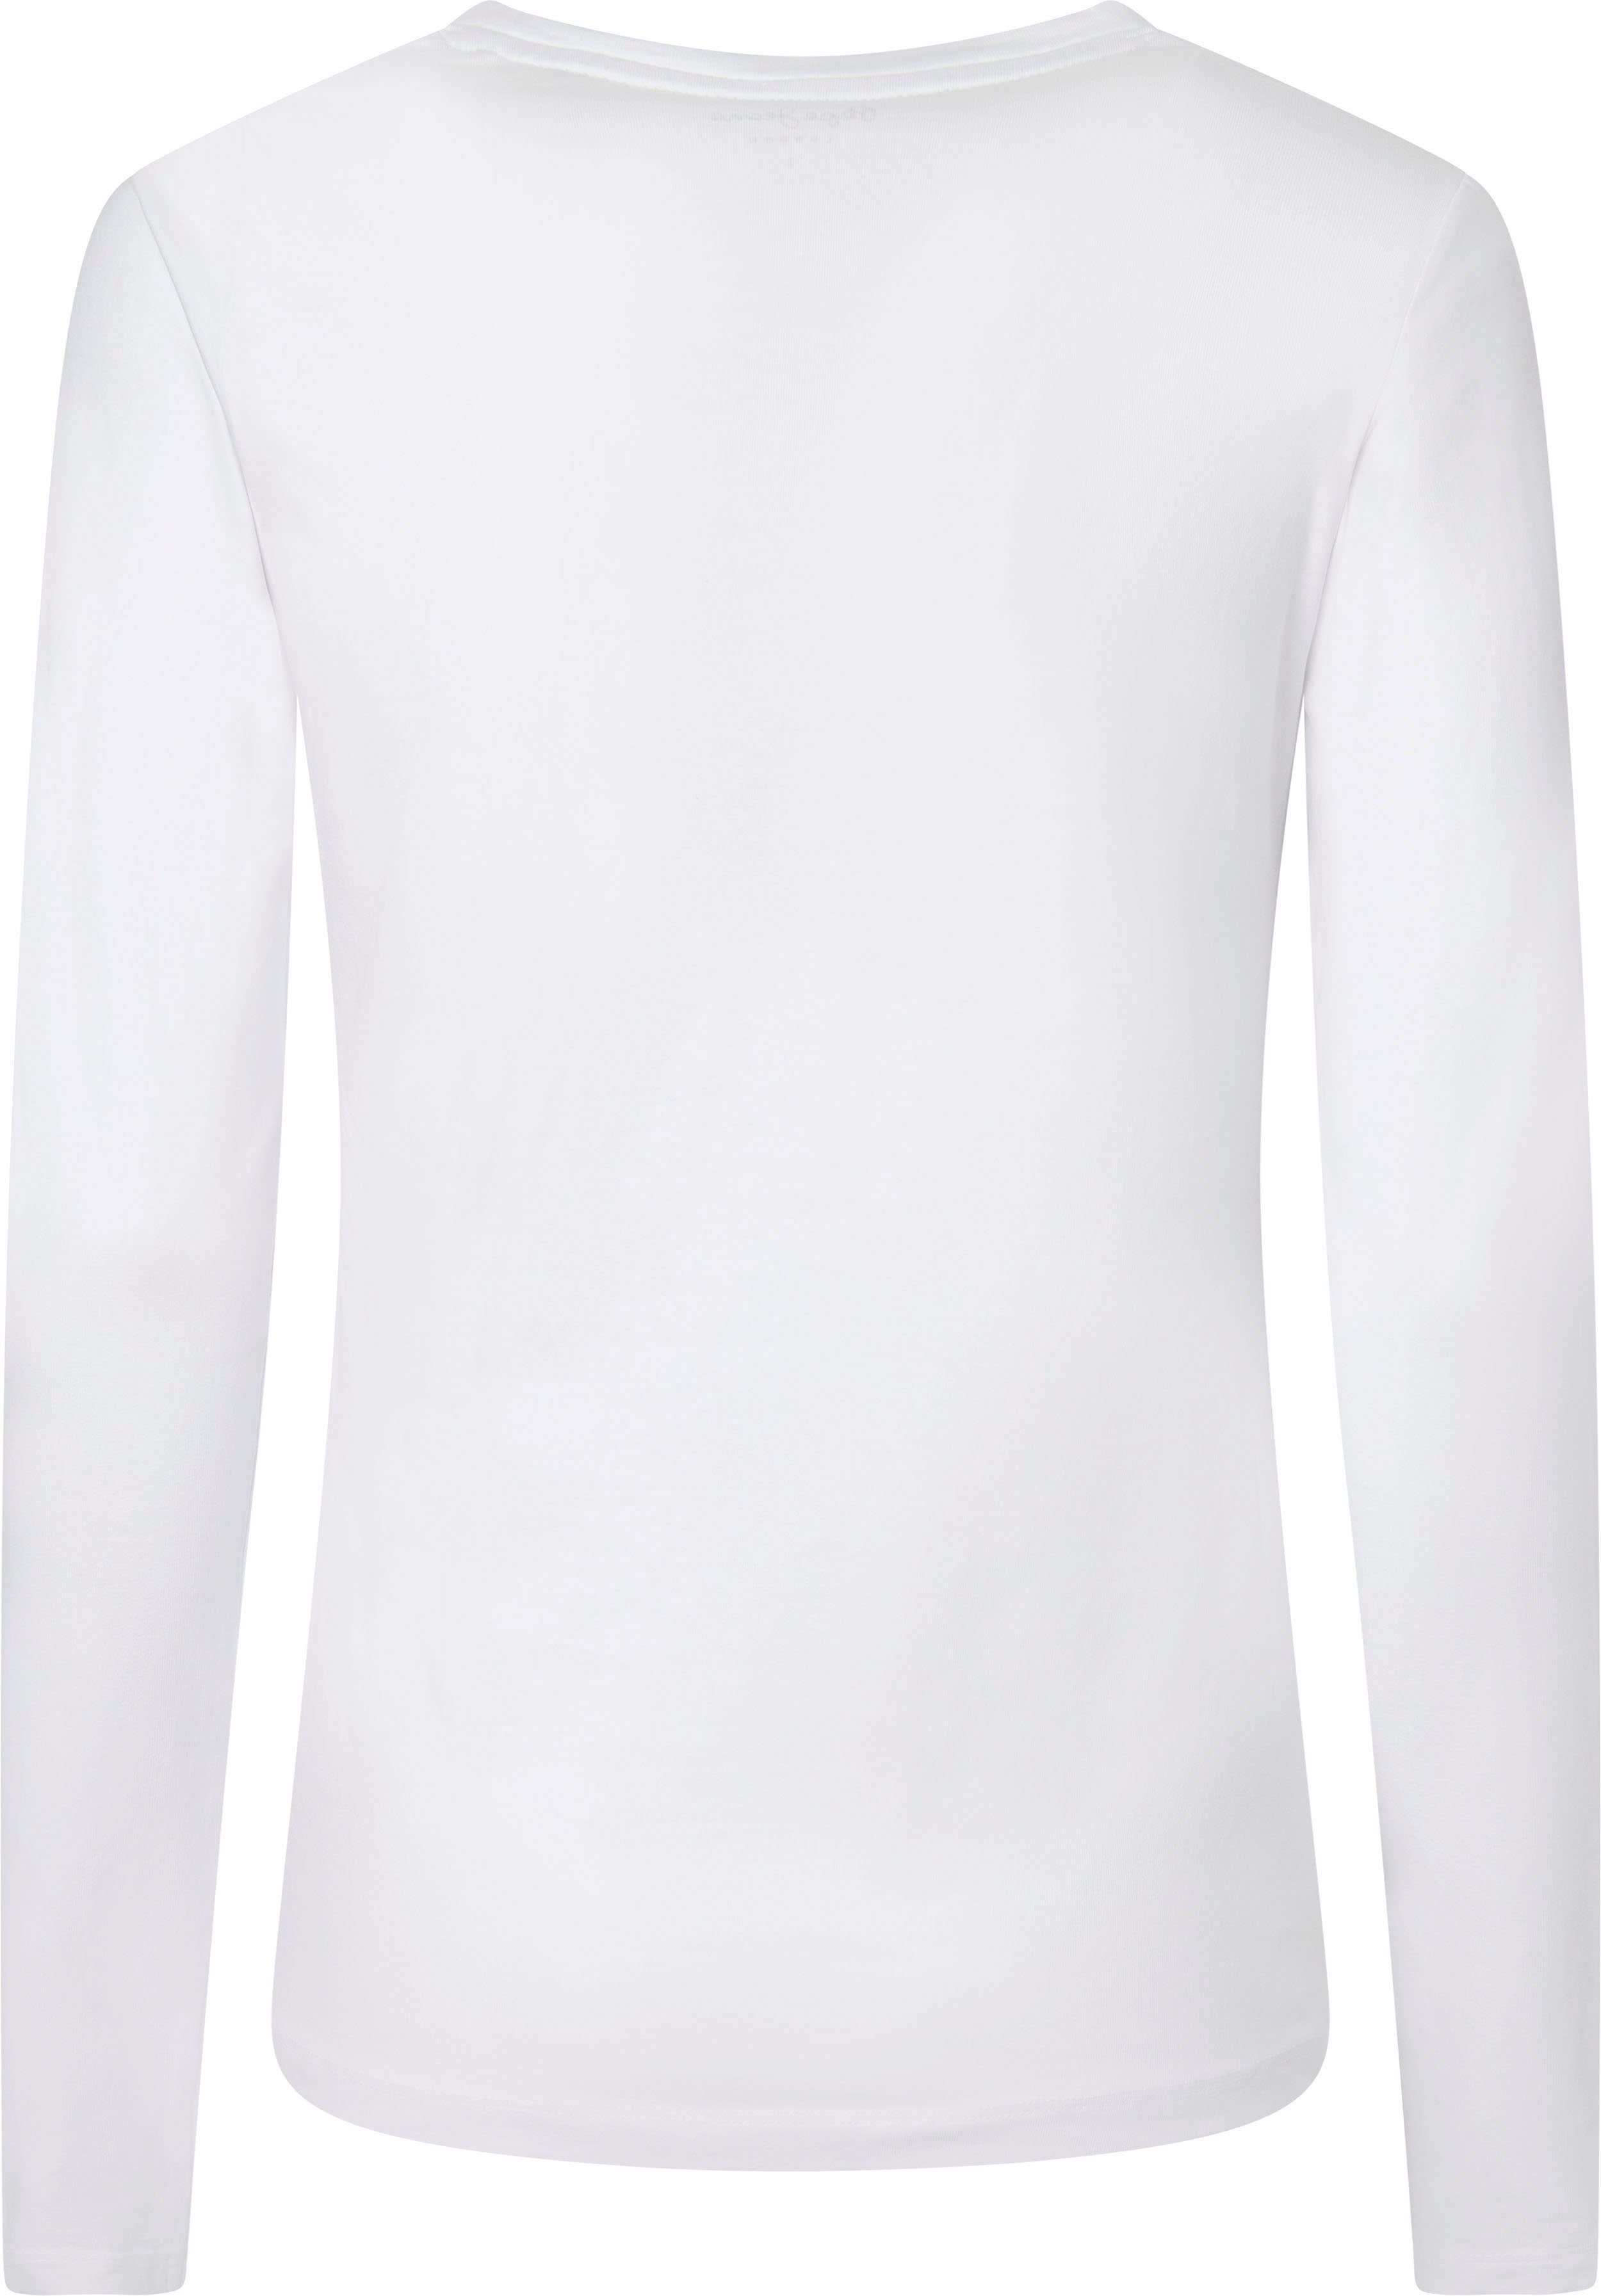 Langarmshirt 8WHITE AMBERTA Marken-Logo-Print Pepe im Jeans N Brustbereich mit kleinem